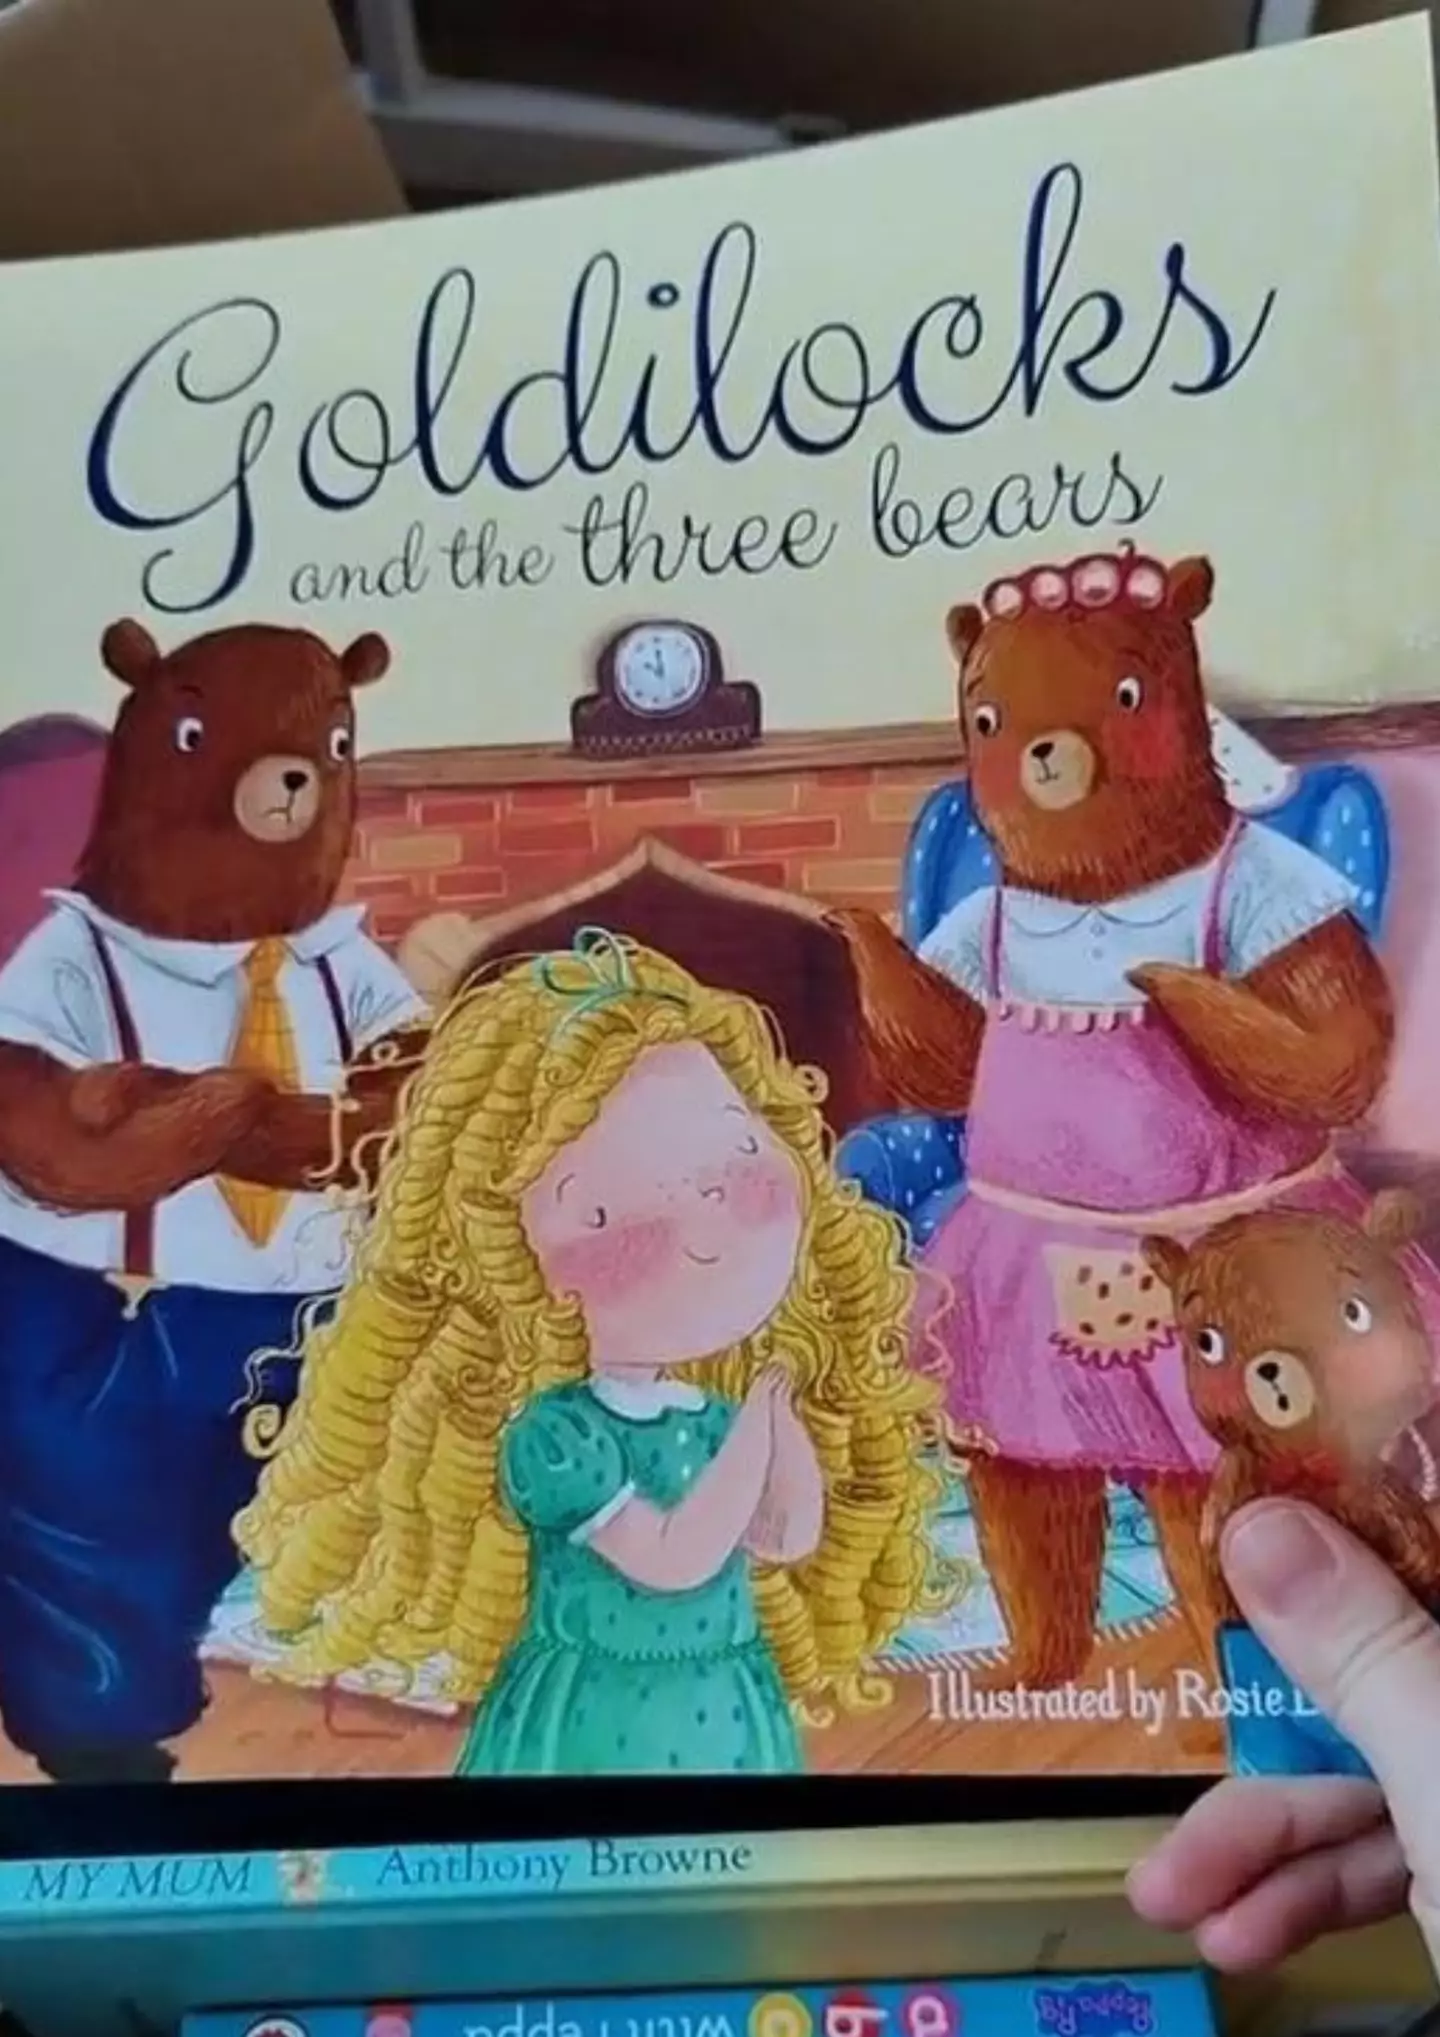 Megi plans on dumping all her Goldilocks and the Three Bears books.